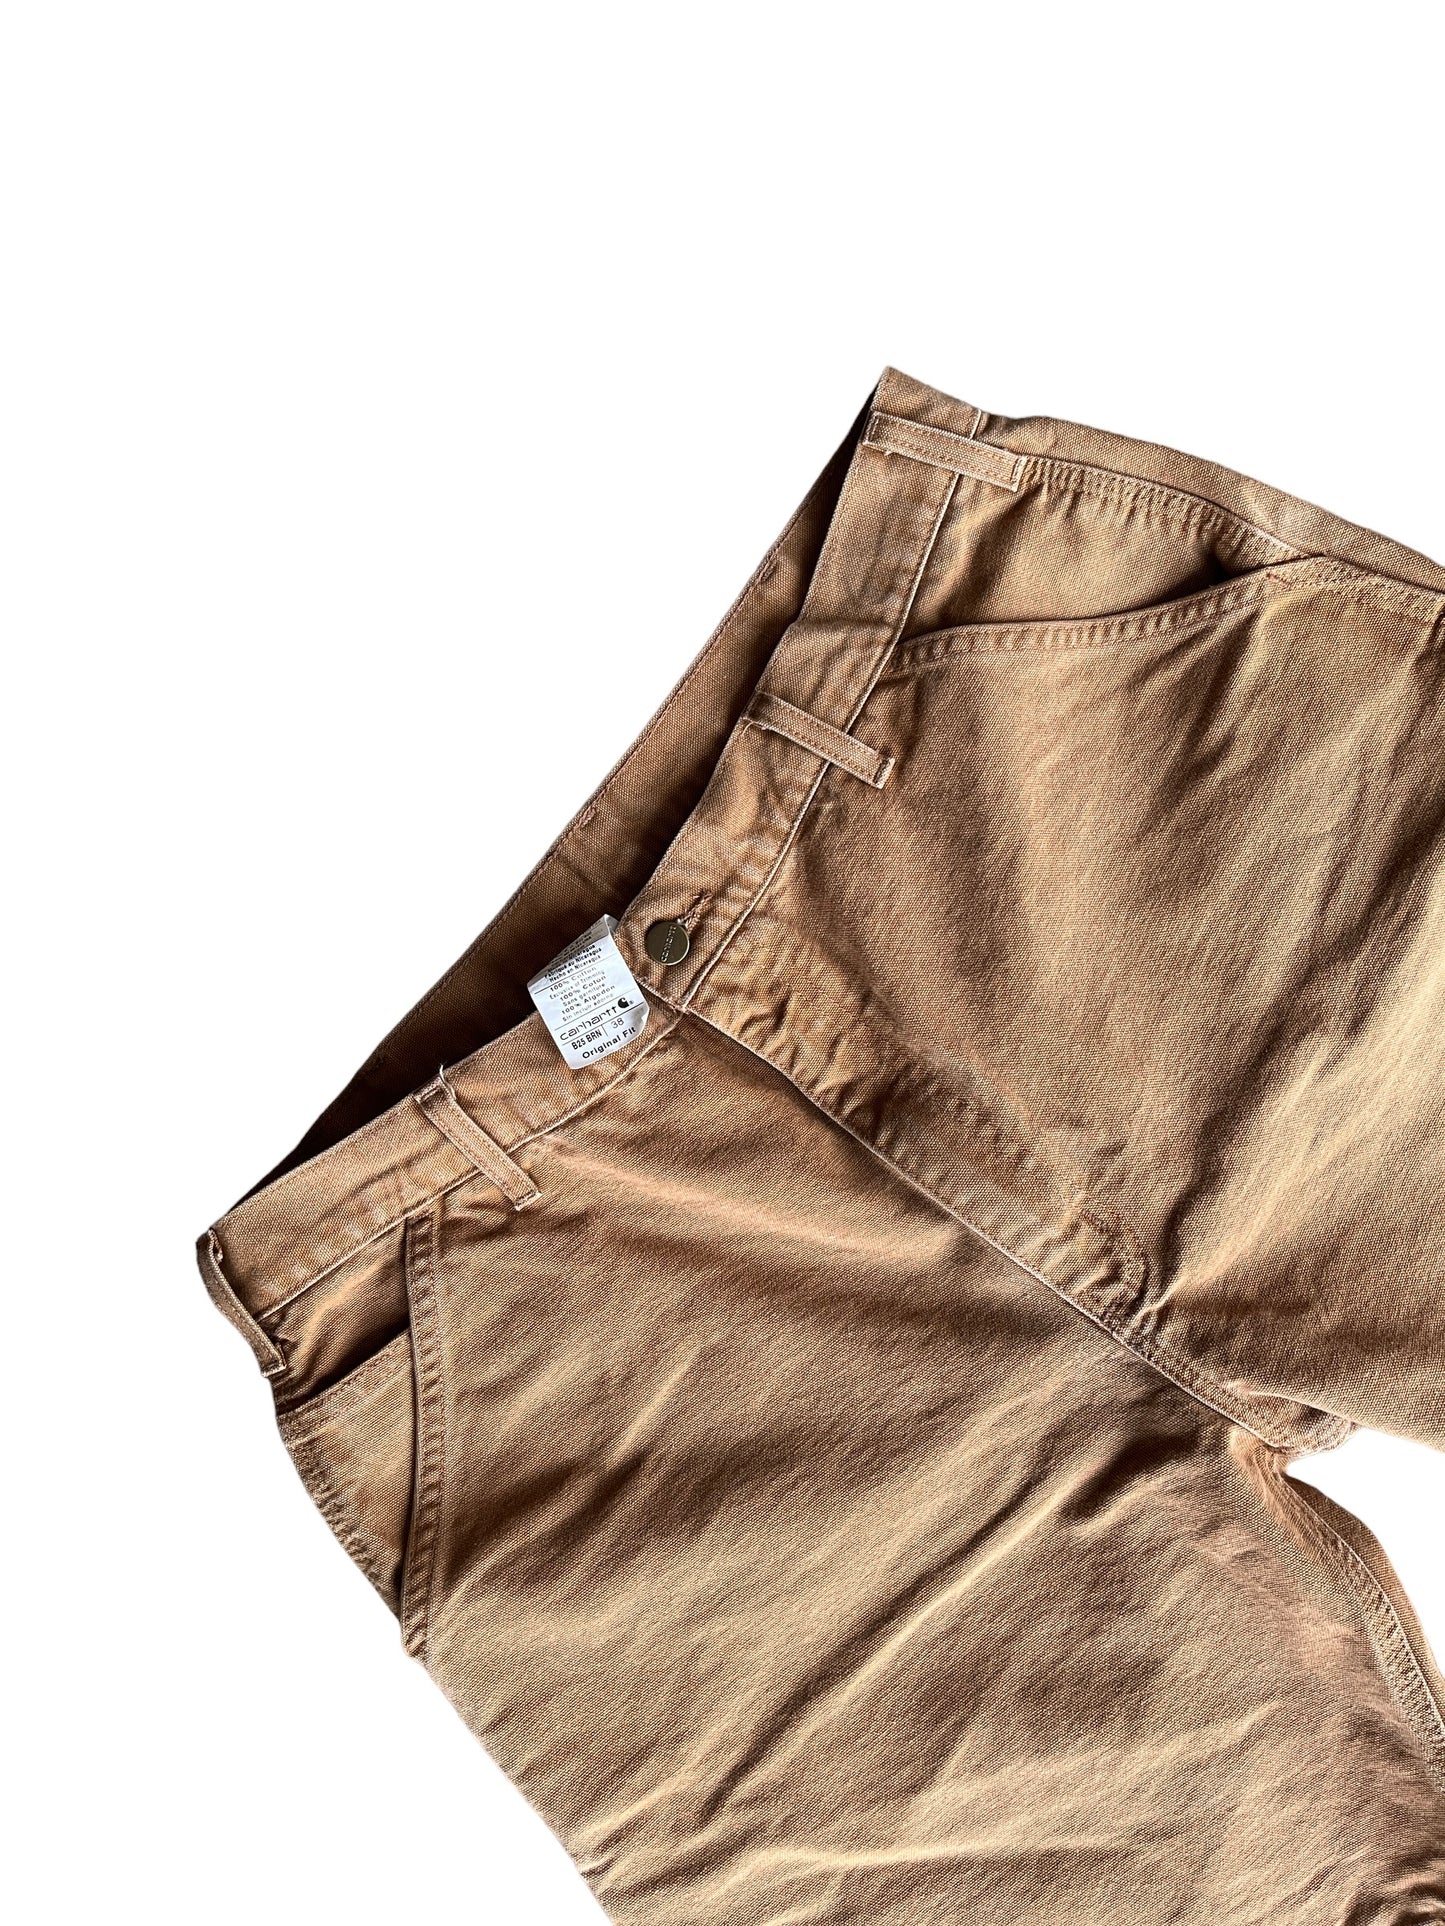 Vintage Carhartt Shorts - Duck Brown